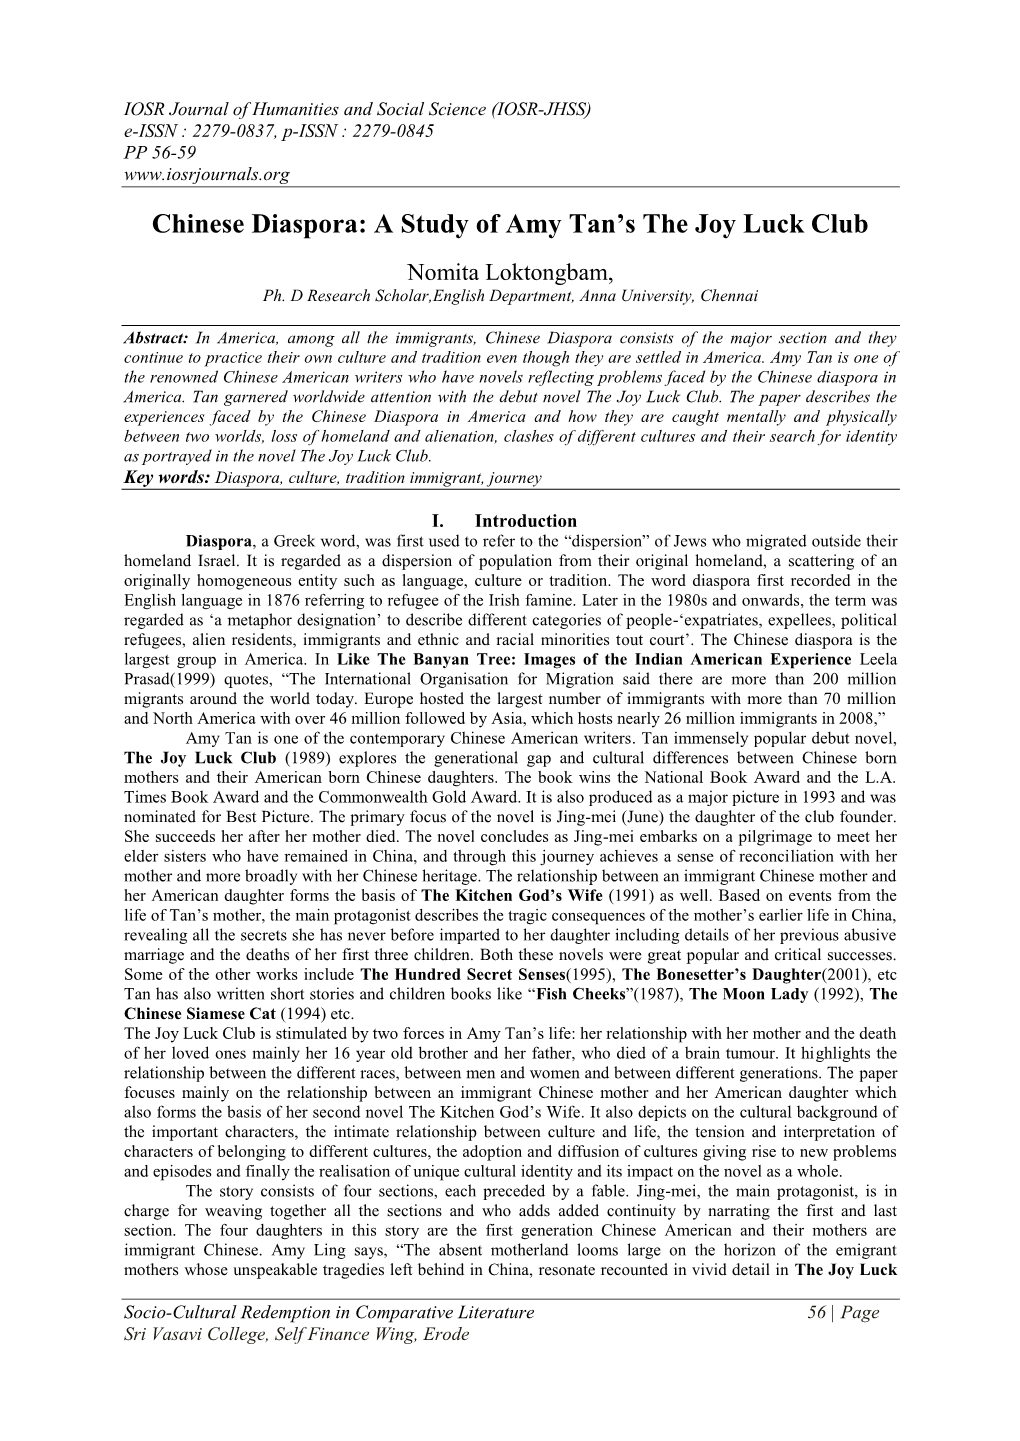 Chinese Diaspora: a Study of Amy Tan's the Joy Luck Club